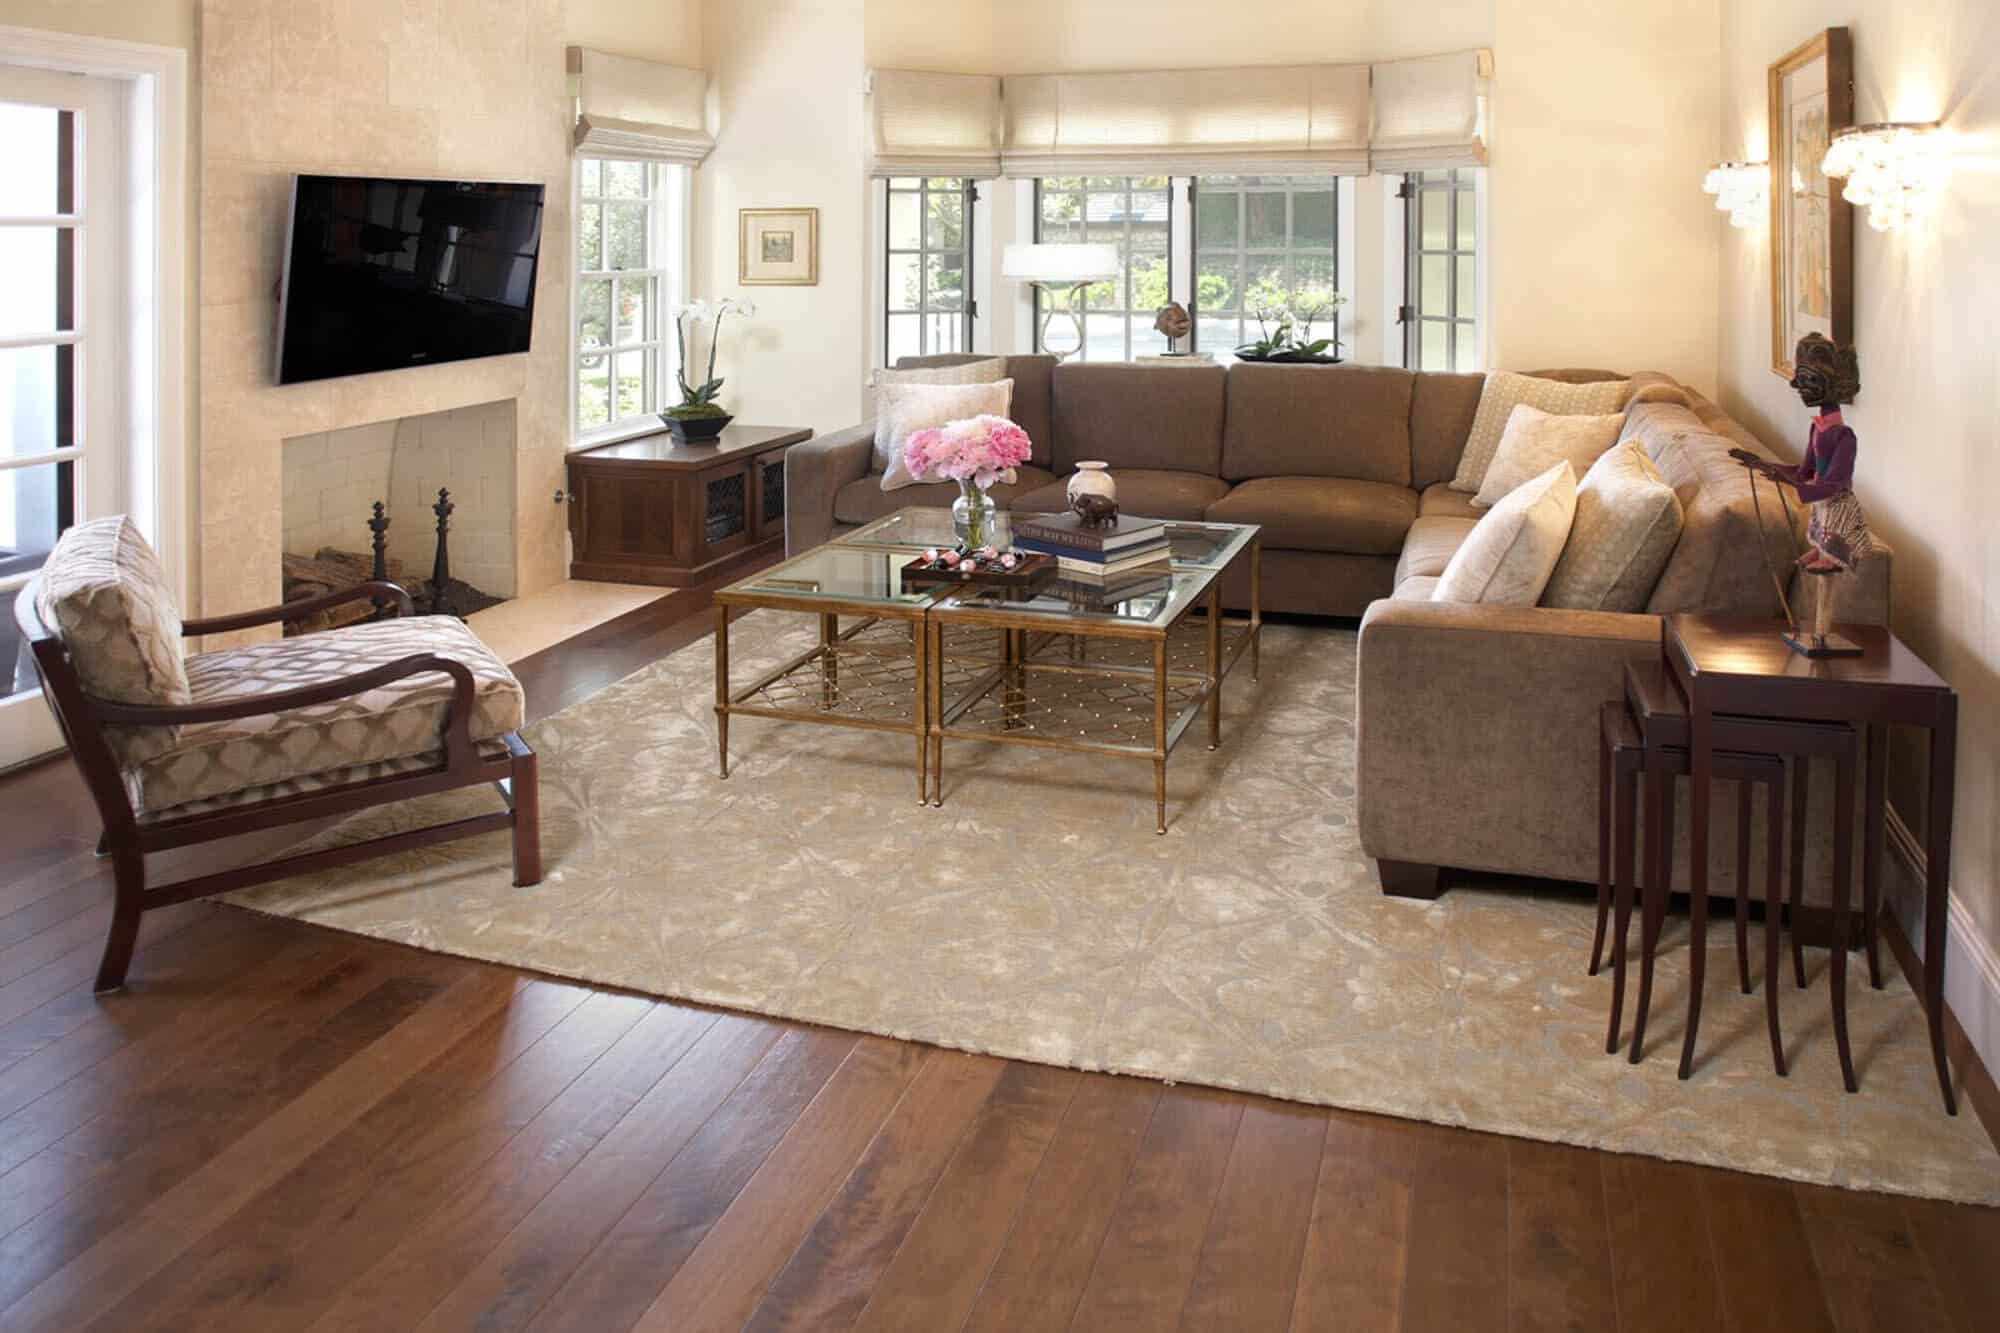 10 Best area Rug Ideas for Living Room Best Interior